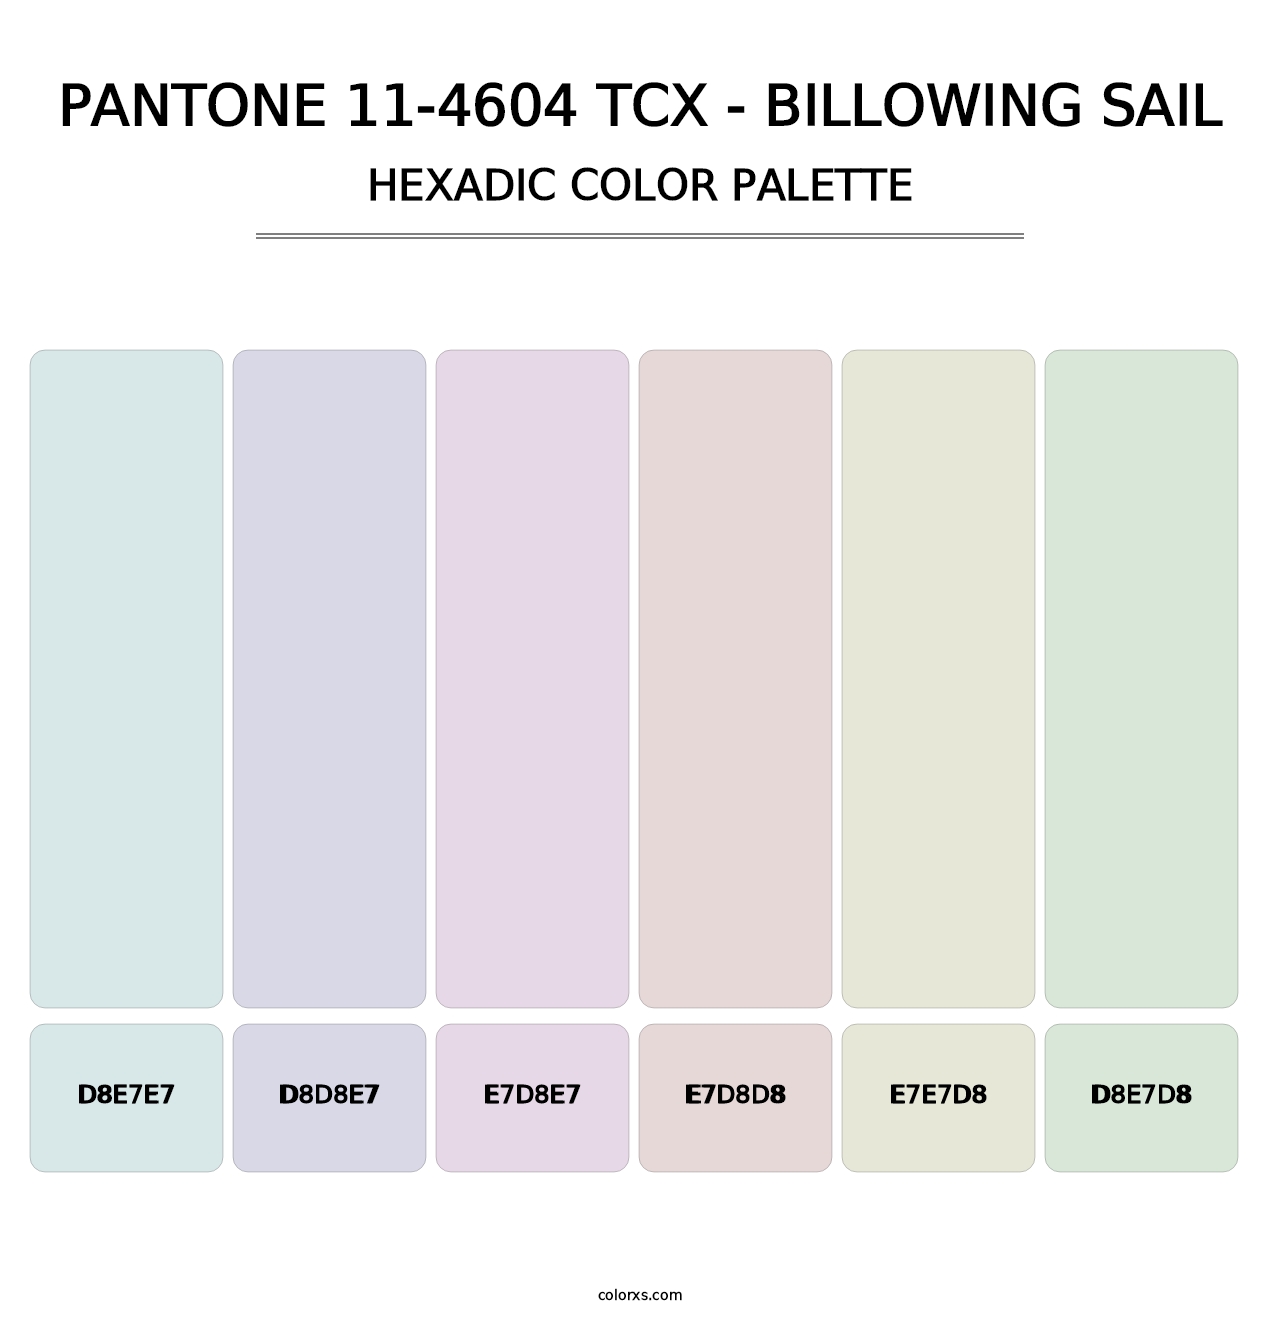 PANTONE 11-4604 TCX - Billowing Sail - Hexadic Color Palette